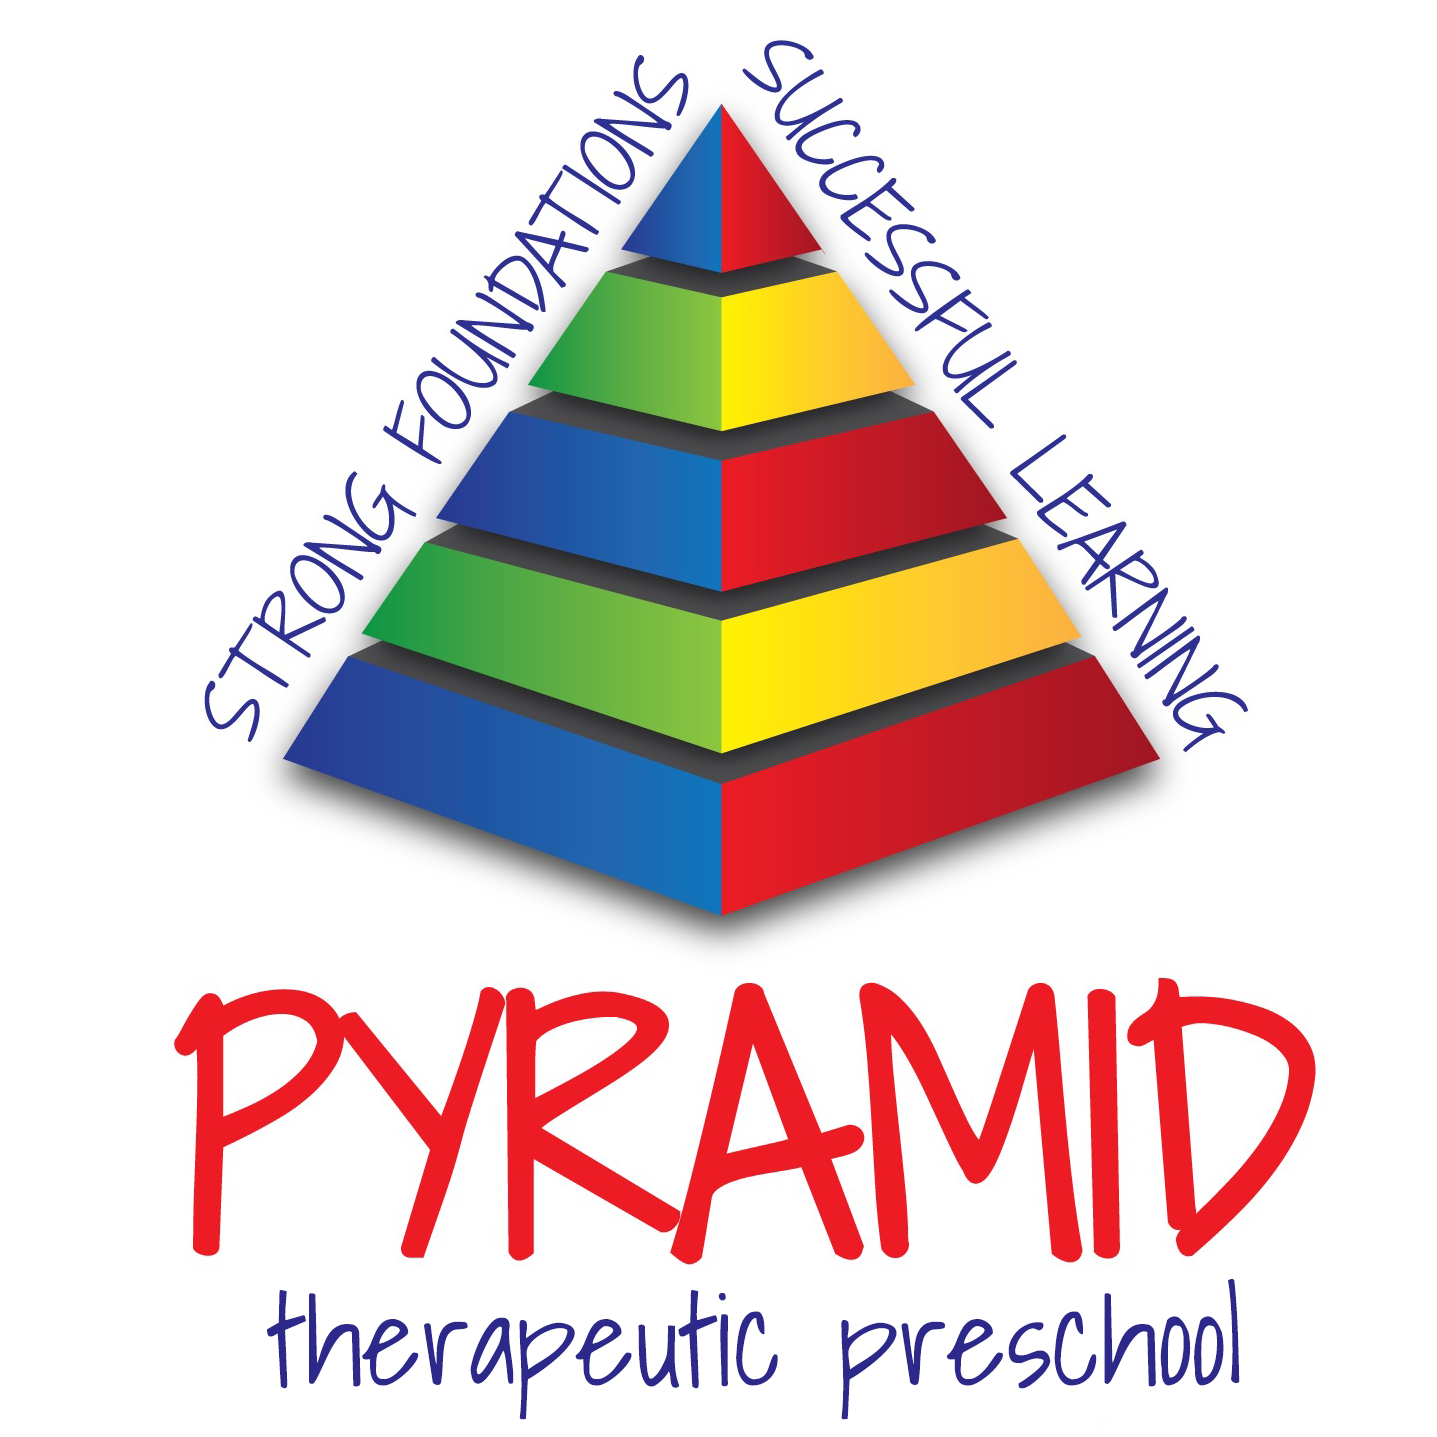 Pyramid Theraputic Preschool